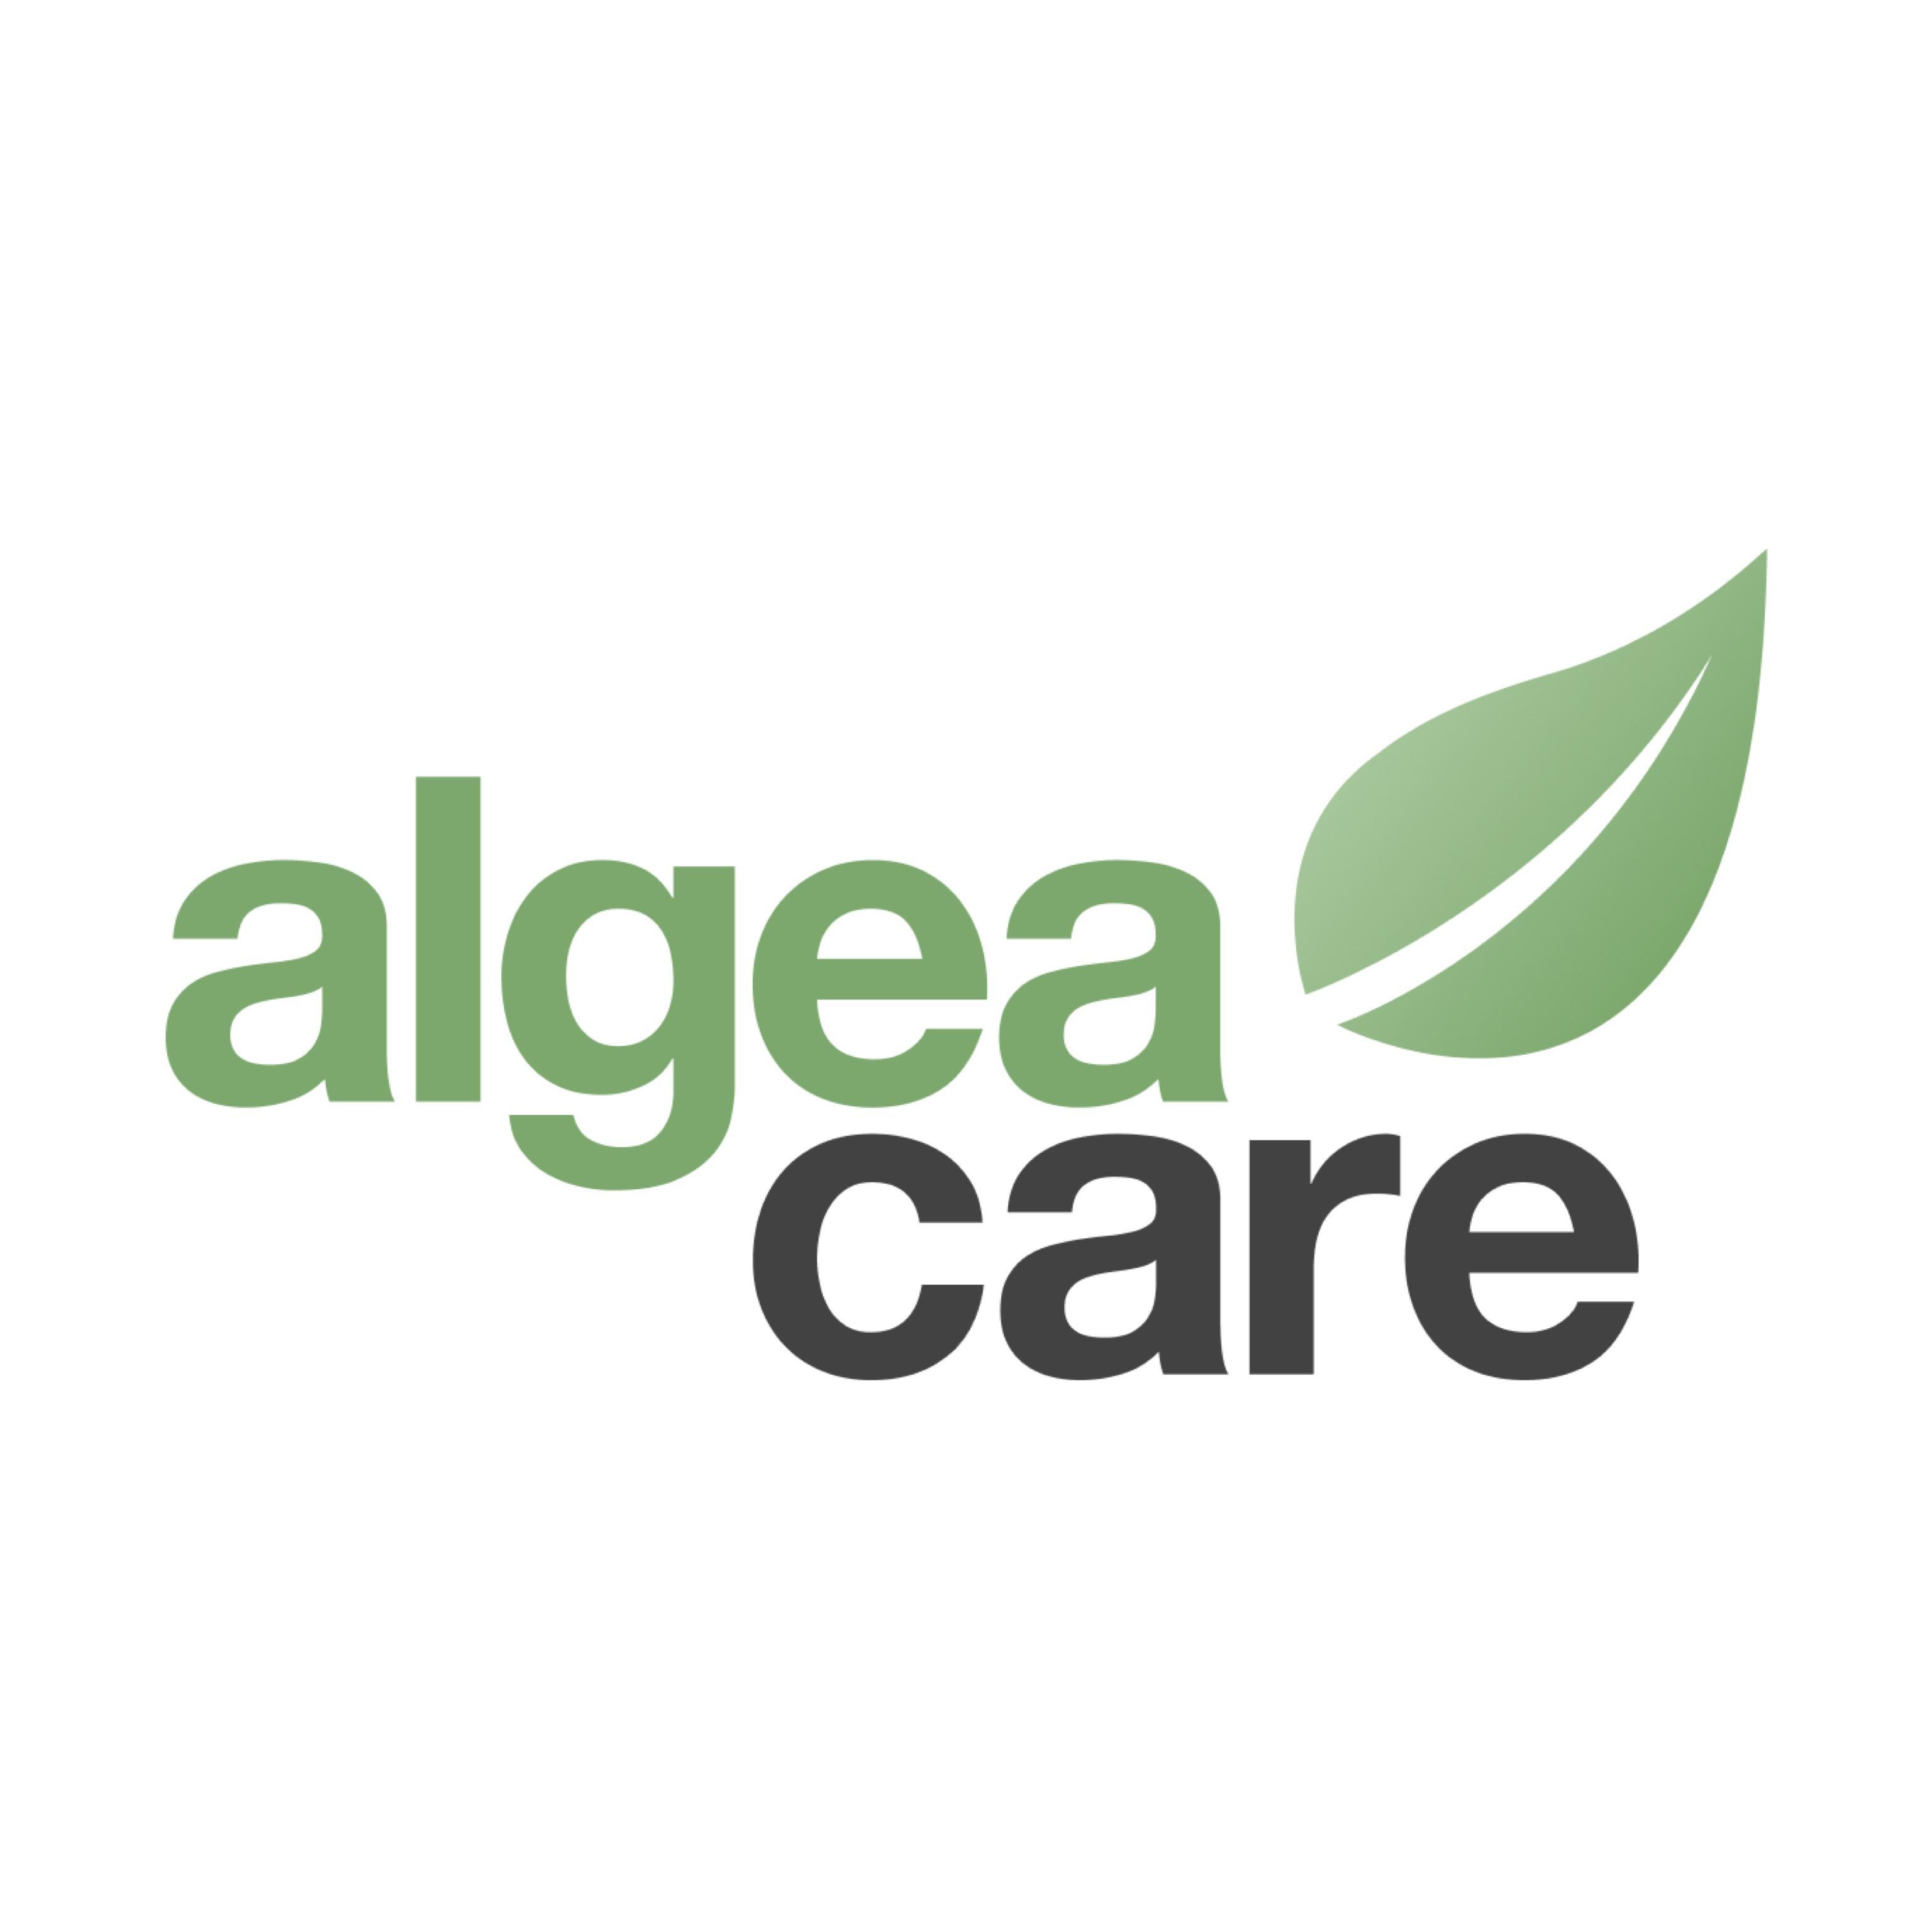 Algea Care Therapiezentrum Dortmund in Dortmund - Logo